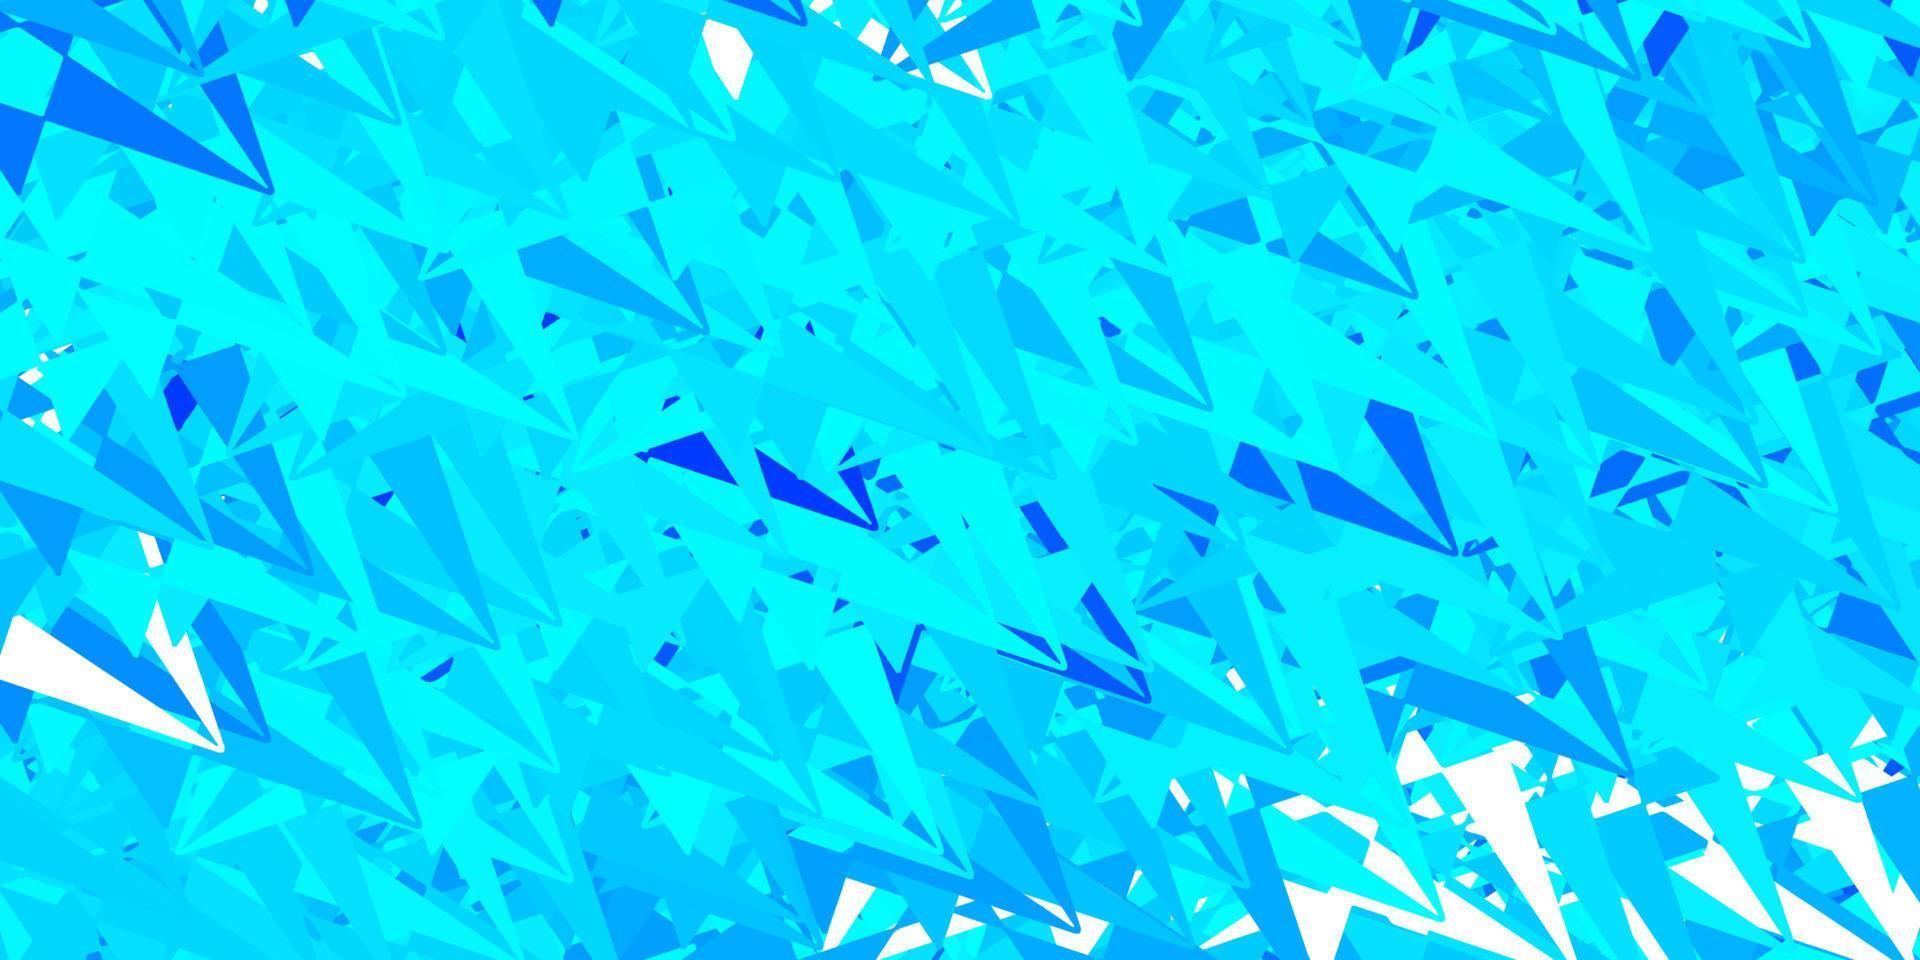 Fondo de vector azul oscuro con formas poligonales.